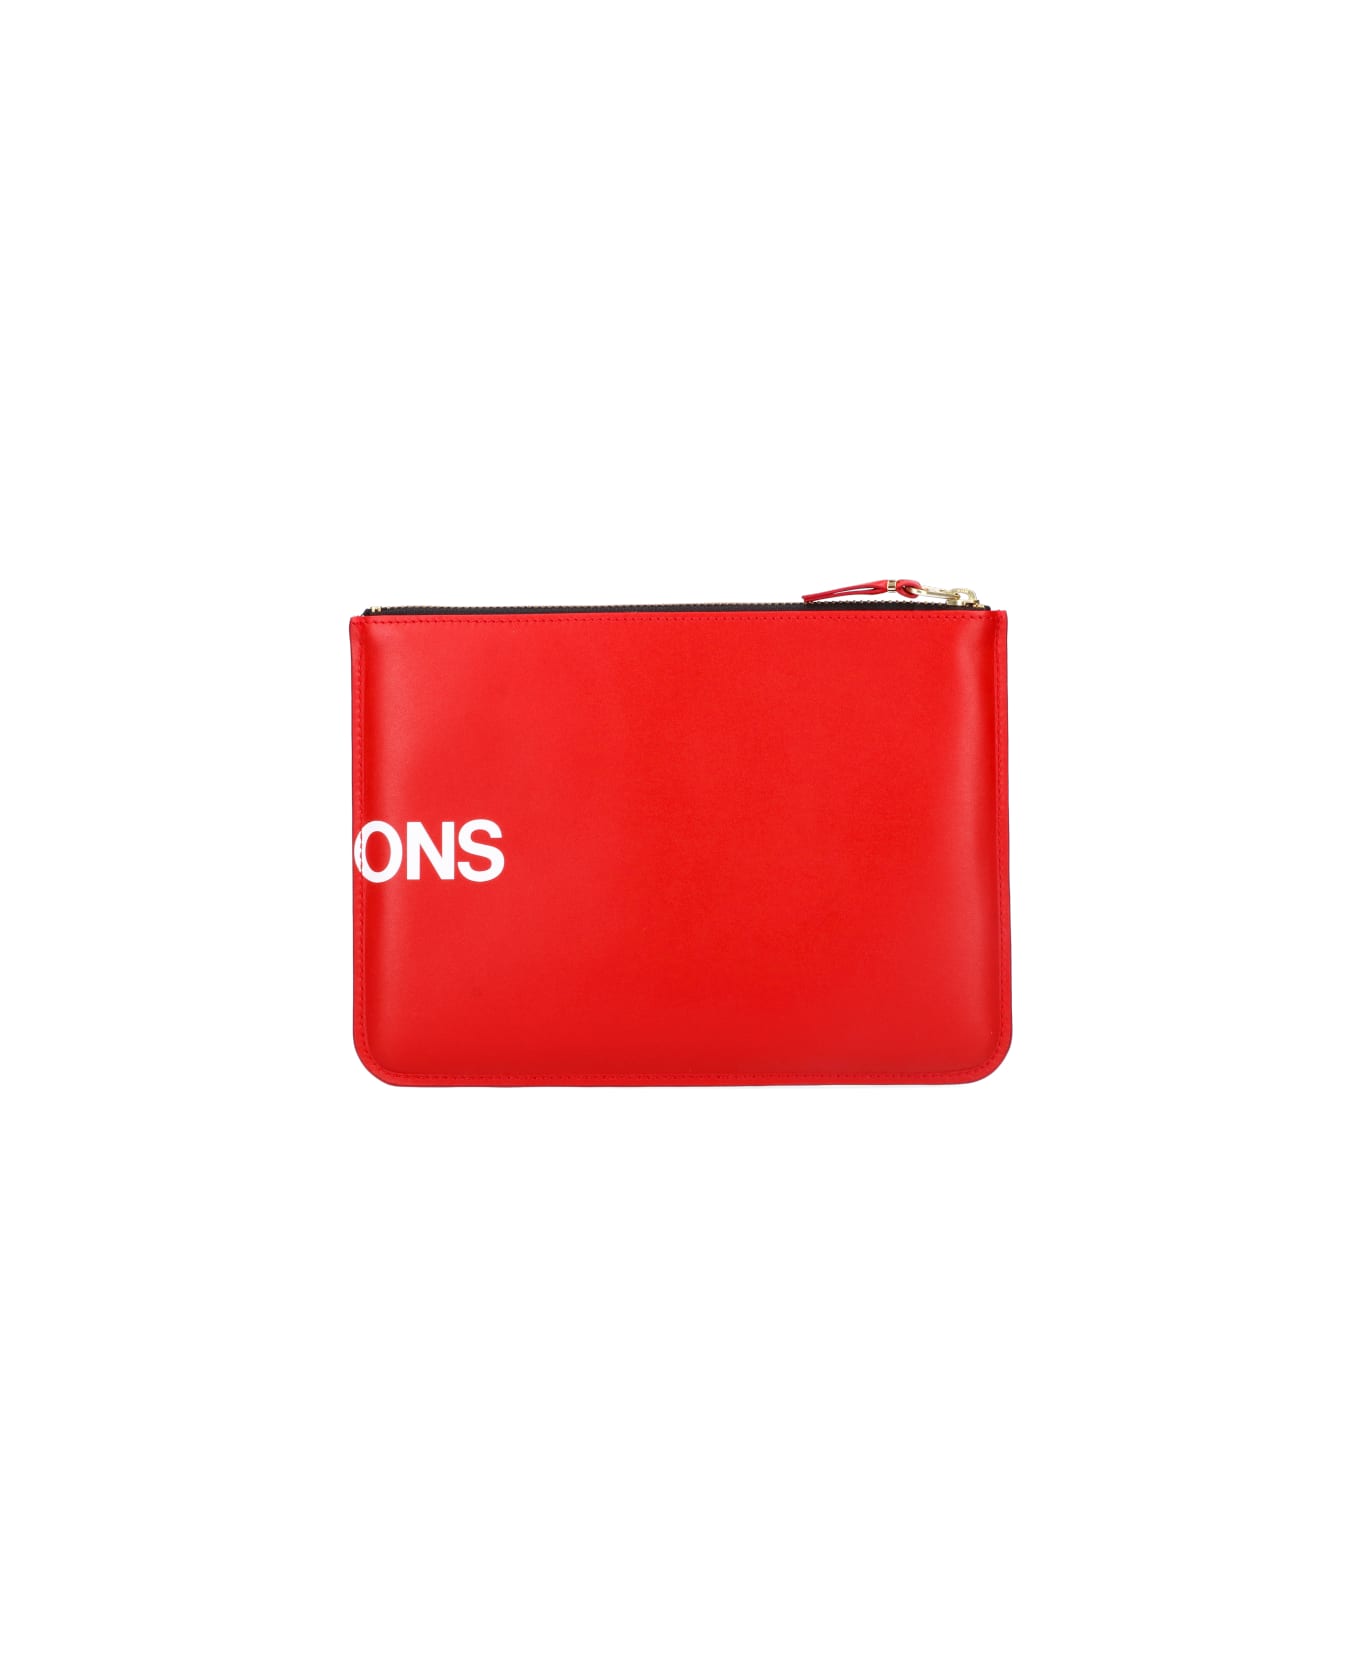 Comme des Garçons Wallet 'huge Logo' pouch - Red バッグ